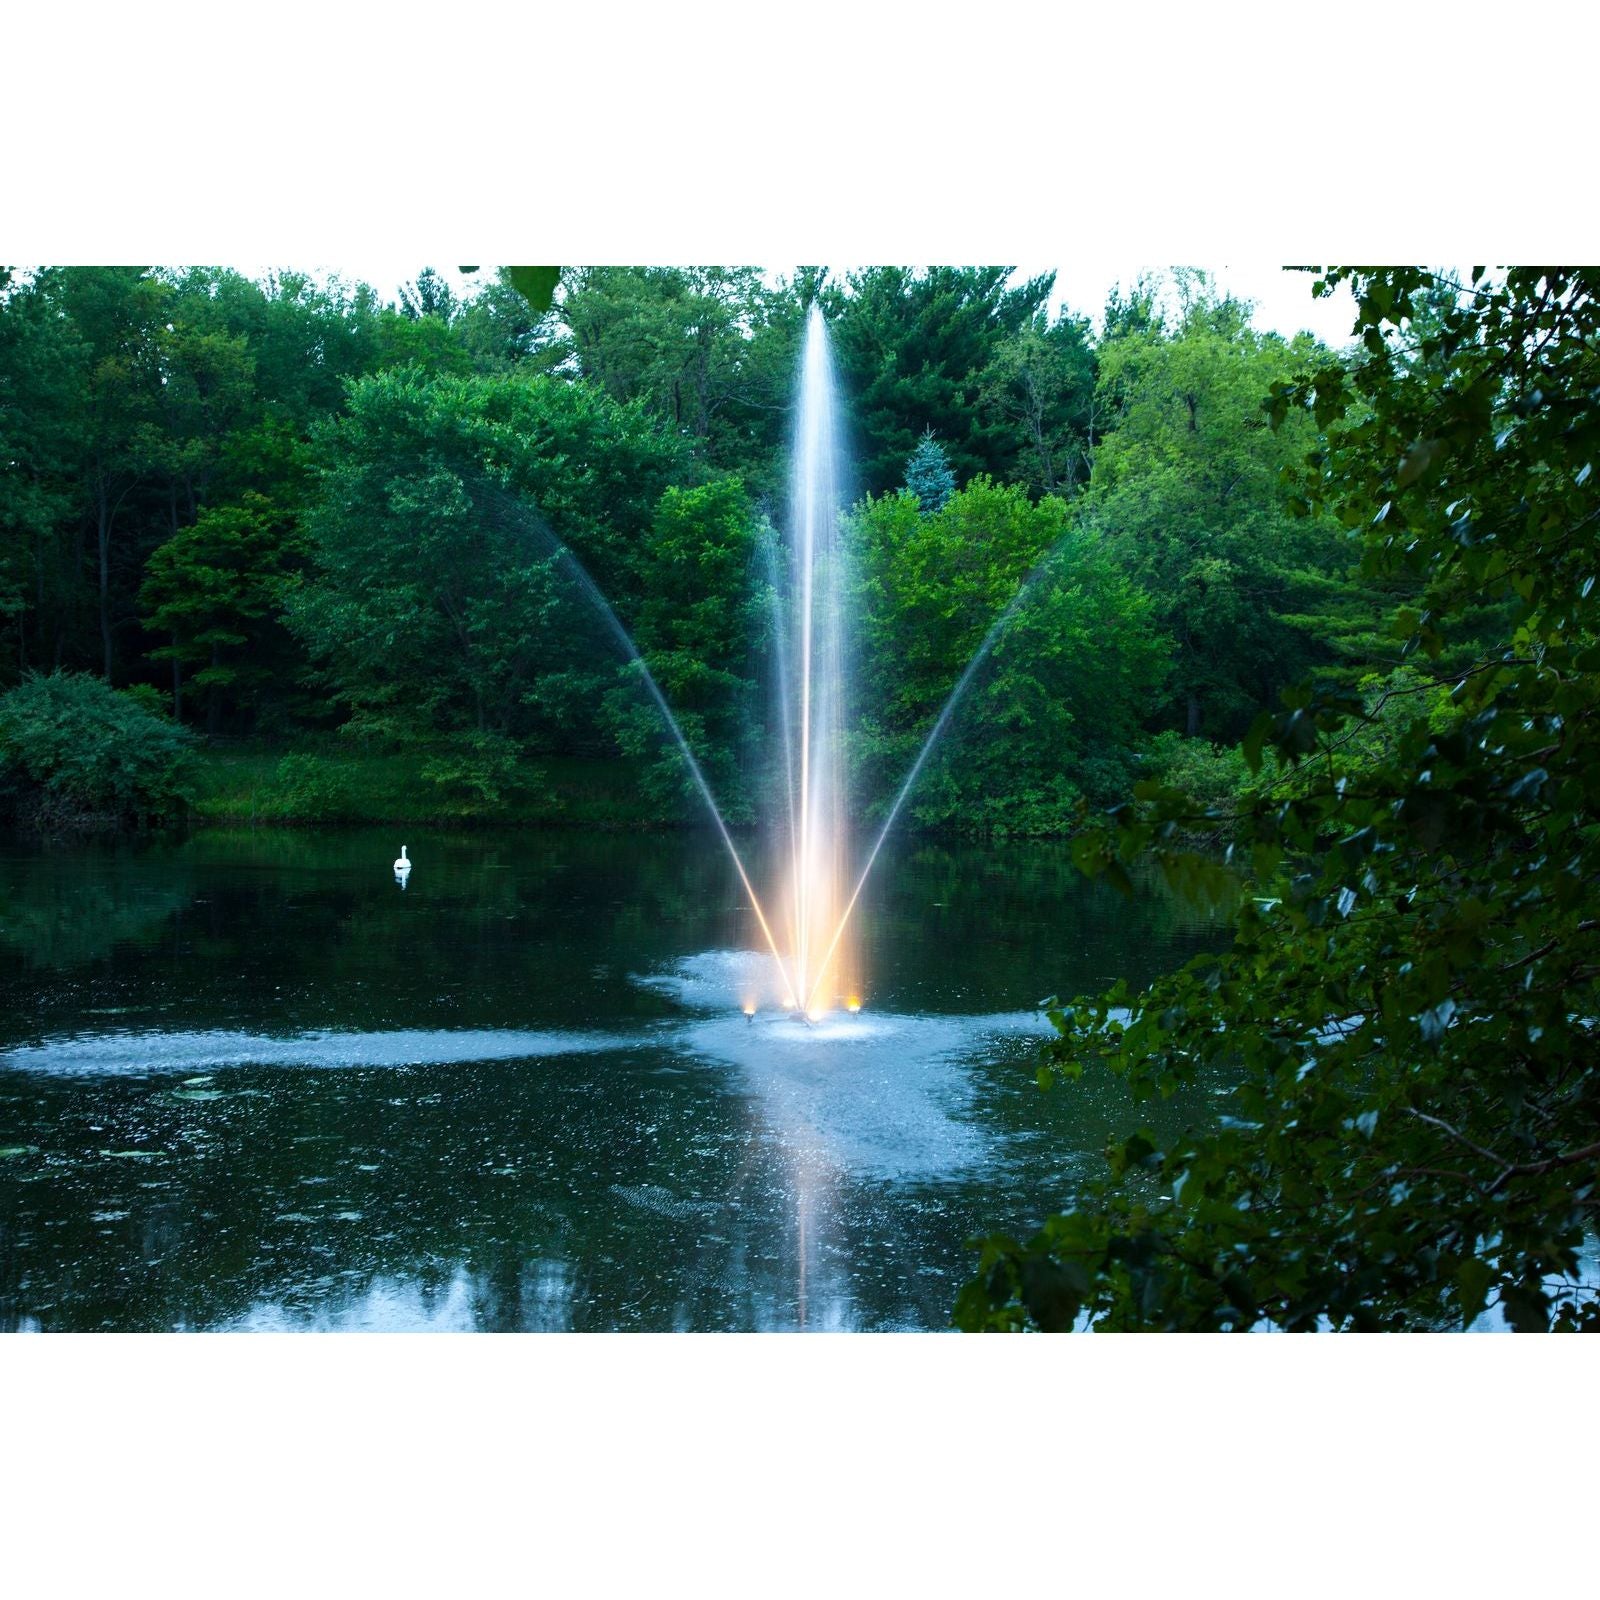 Scott Aerator Clover Pond Fountain